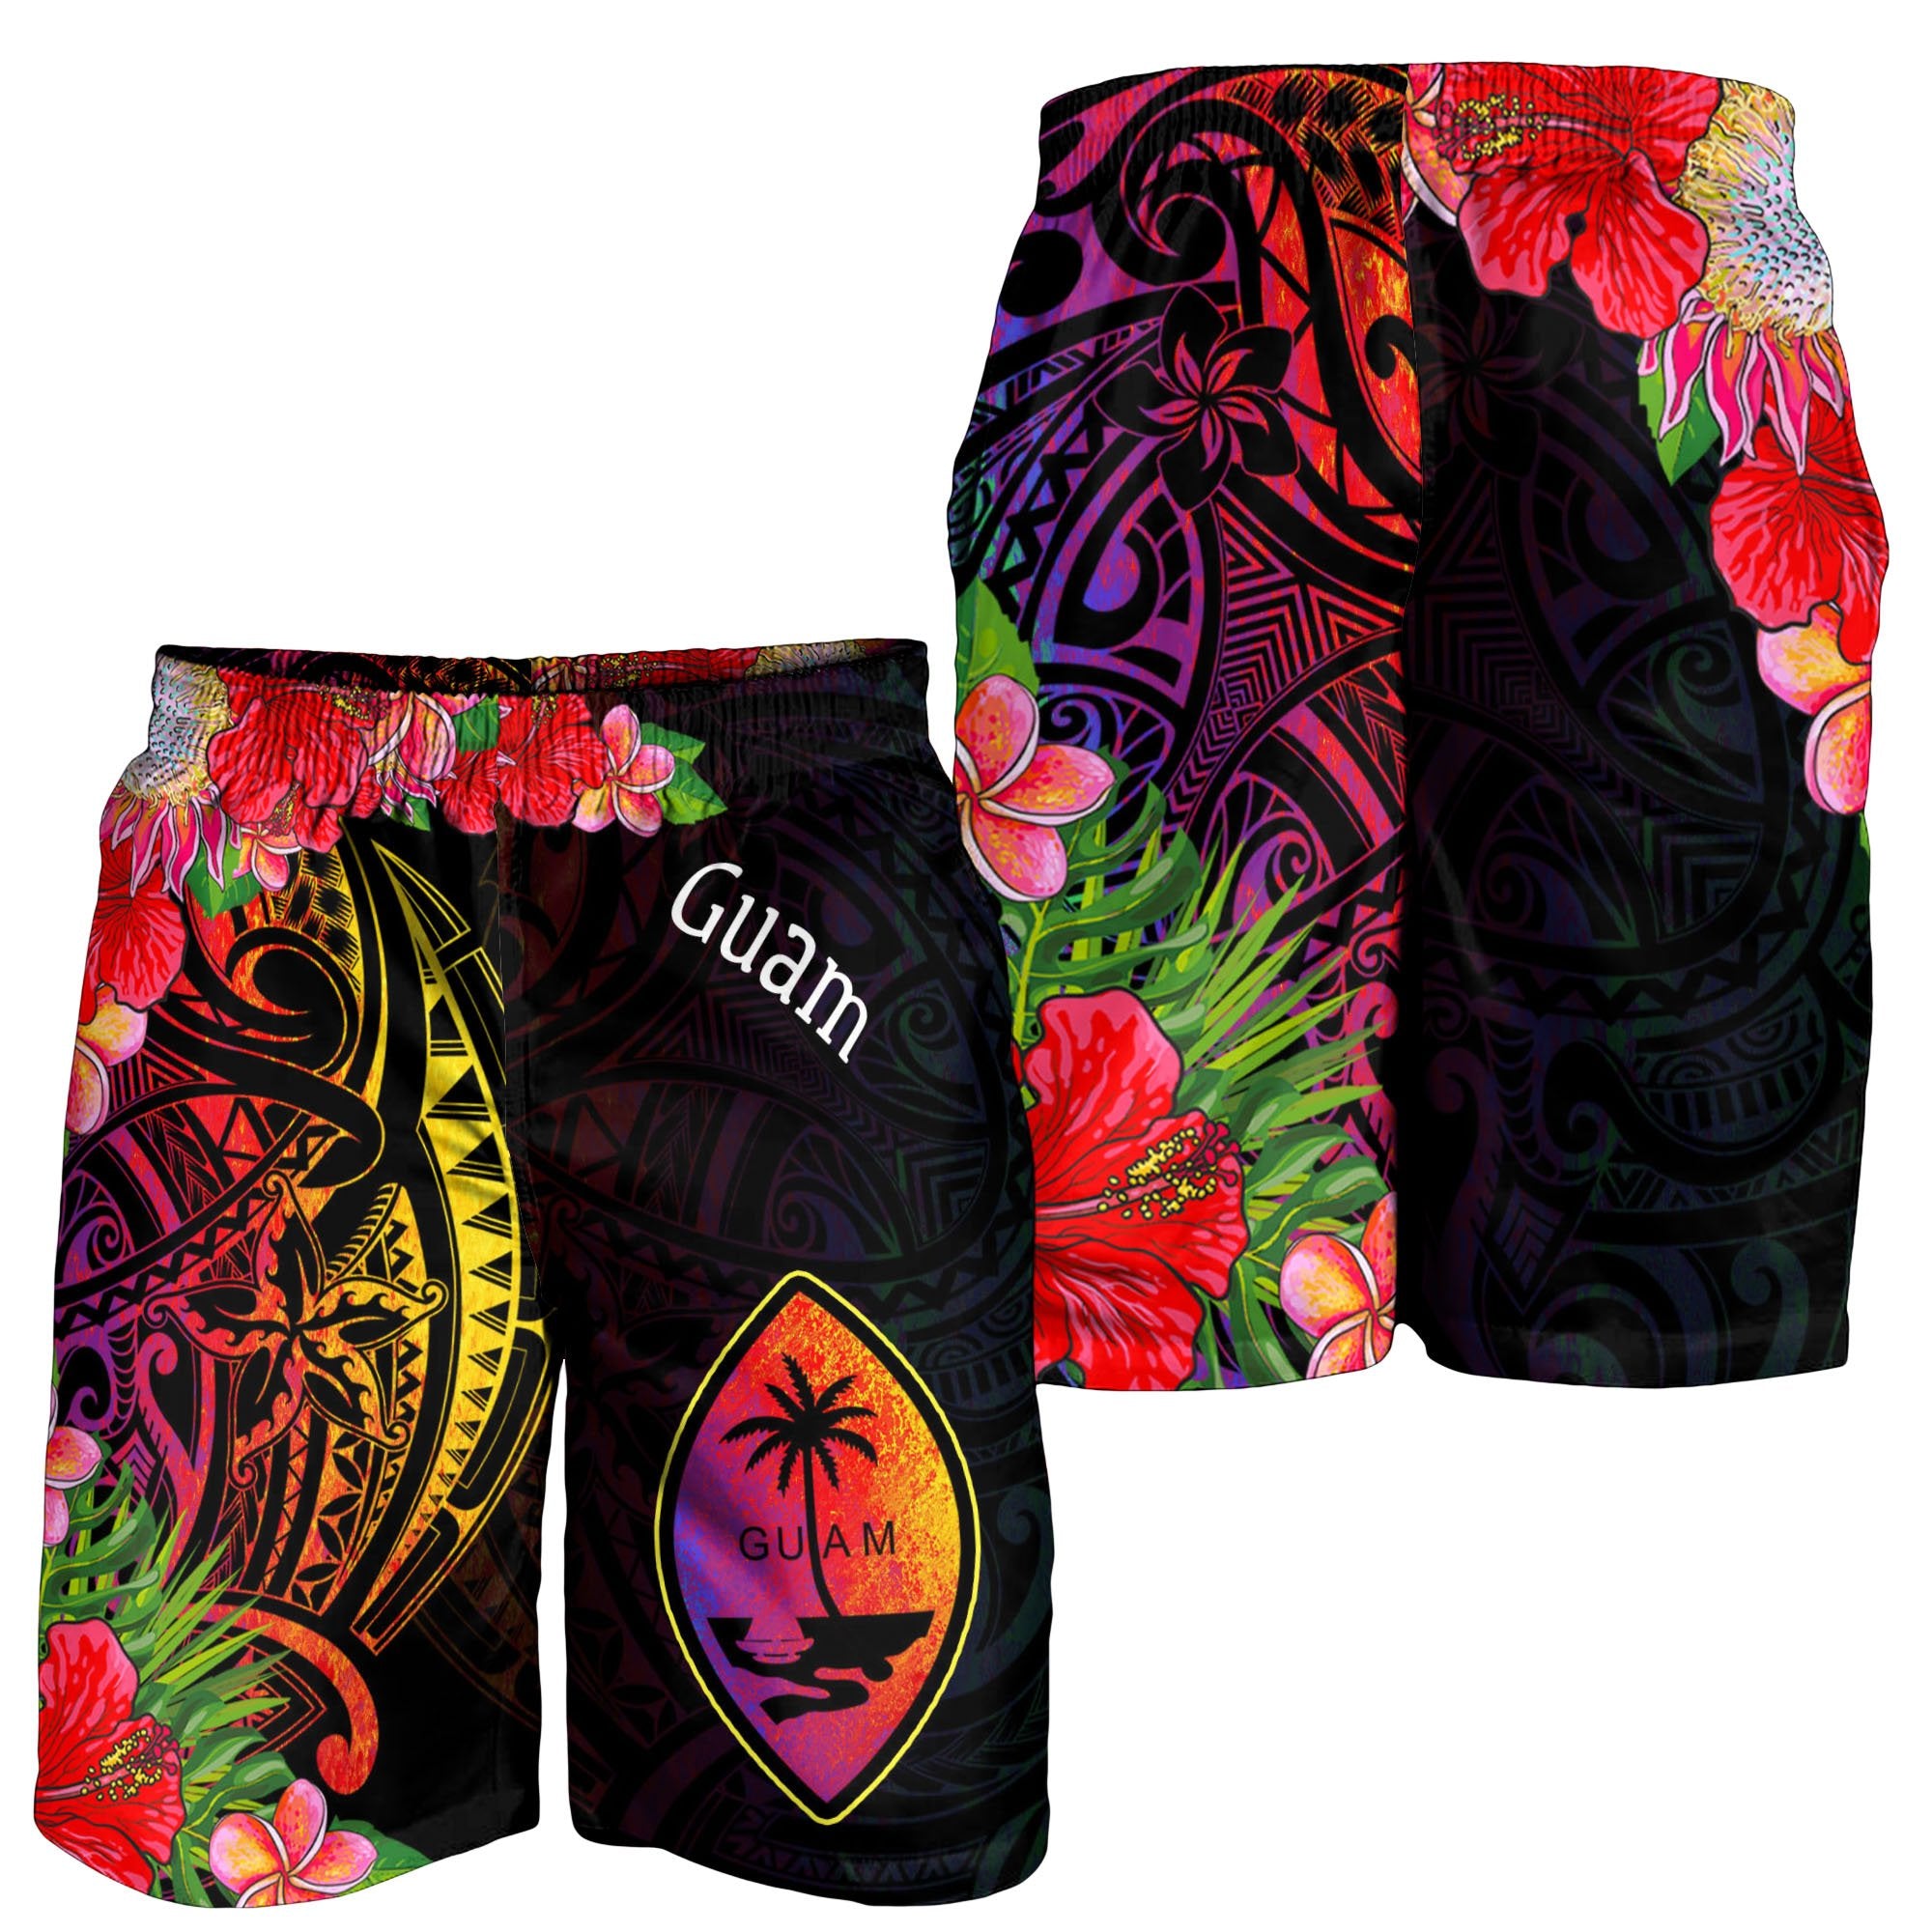 Guam Men's Shorts - Tropical Hippie Style Black - Polynesian Pride